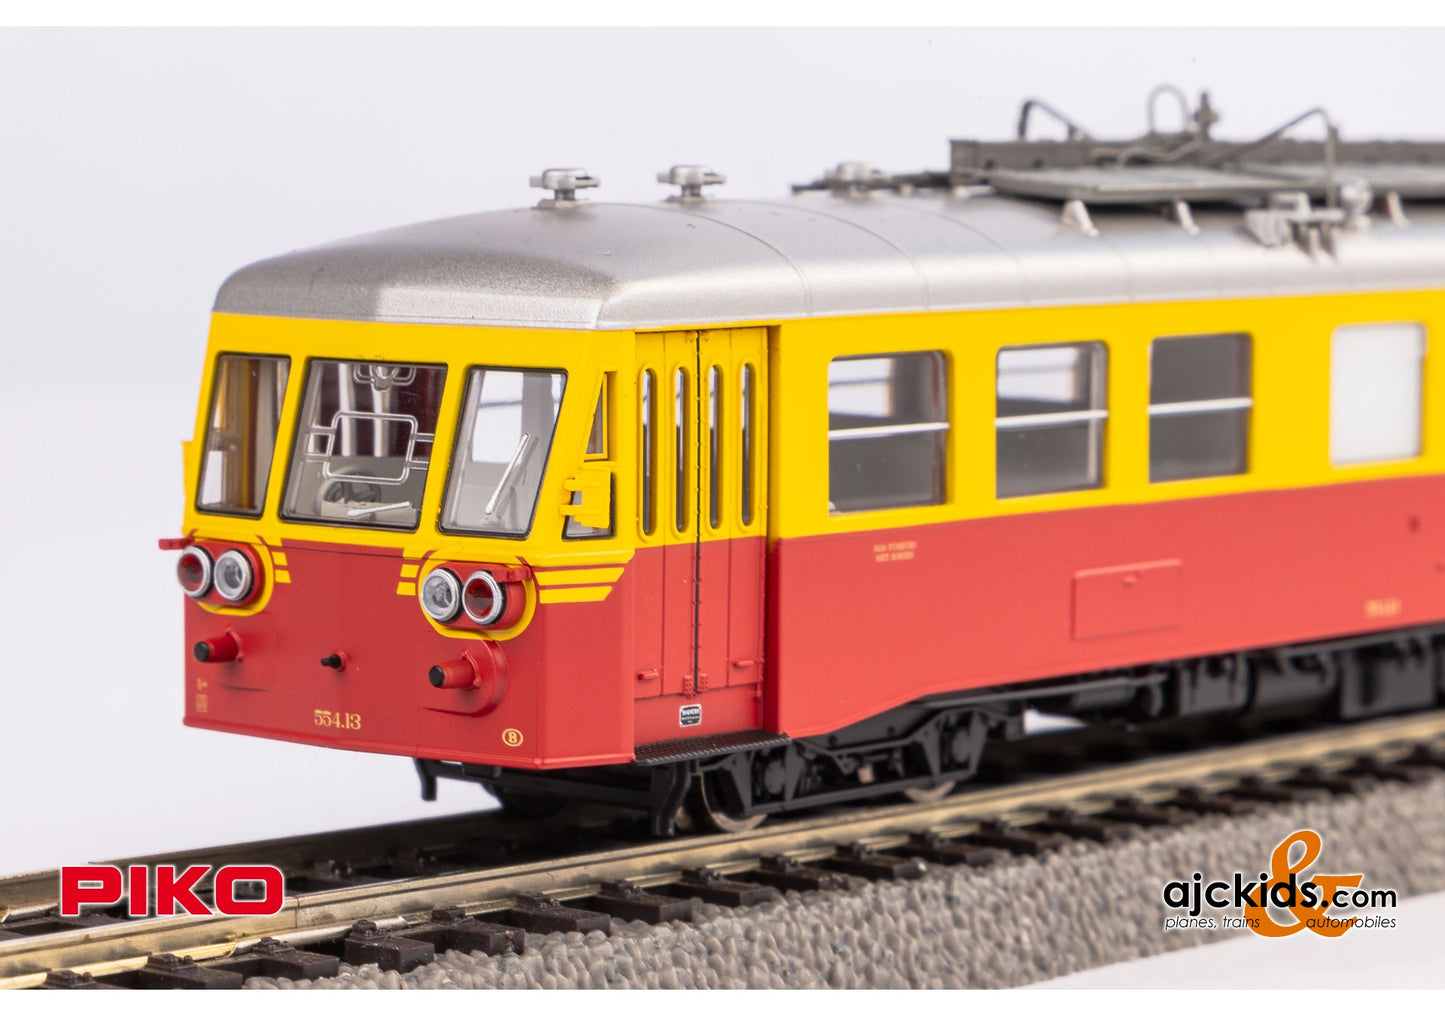 Piko 52797 - Rh 554 Diesel railcar SNCB IV Sound